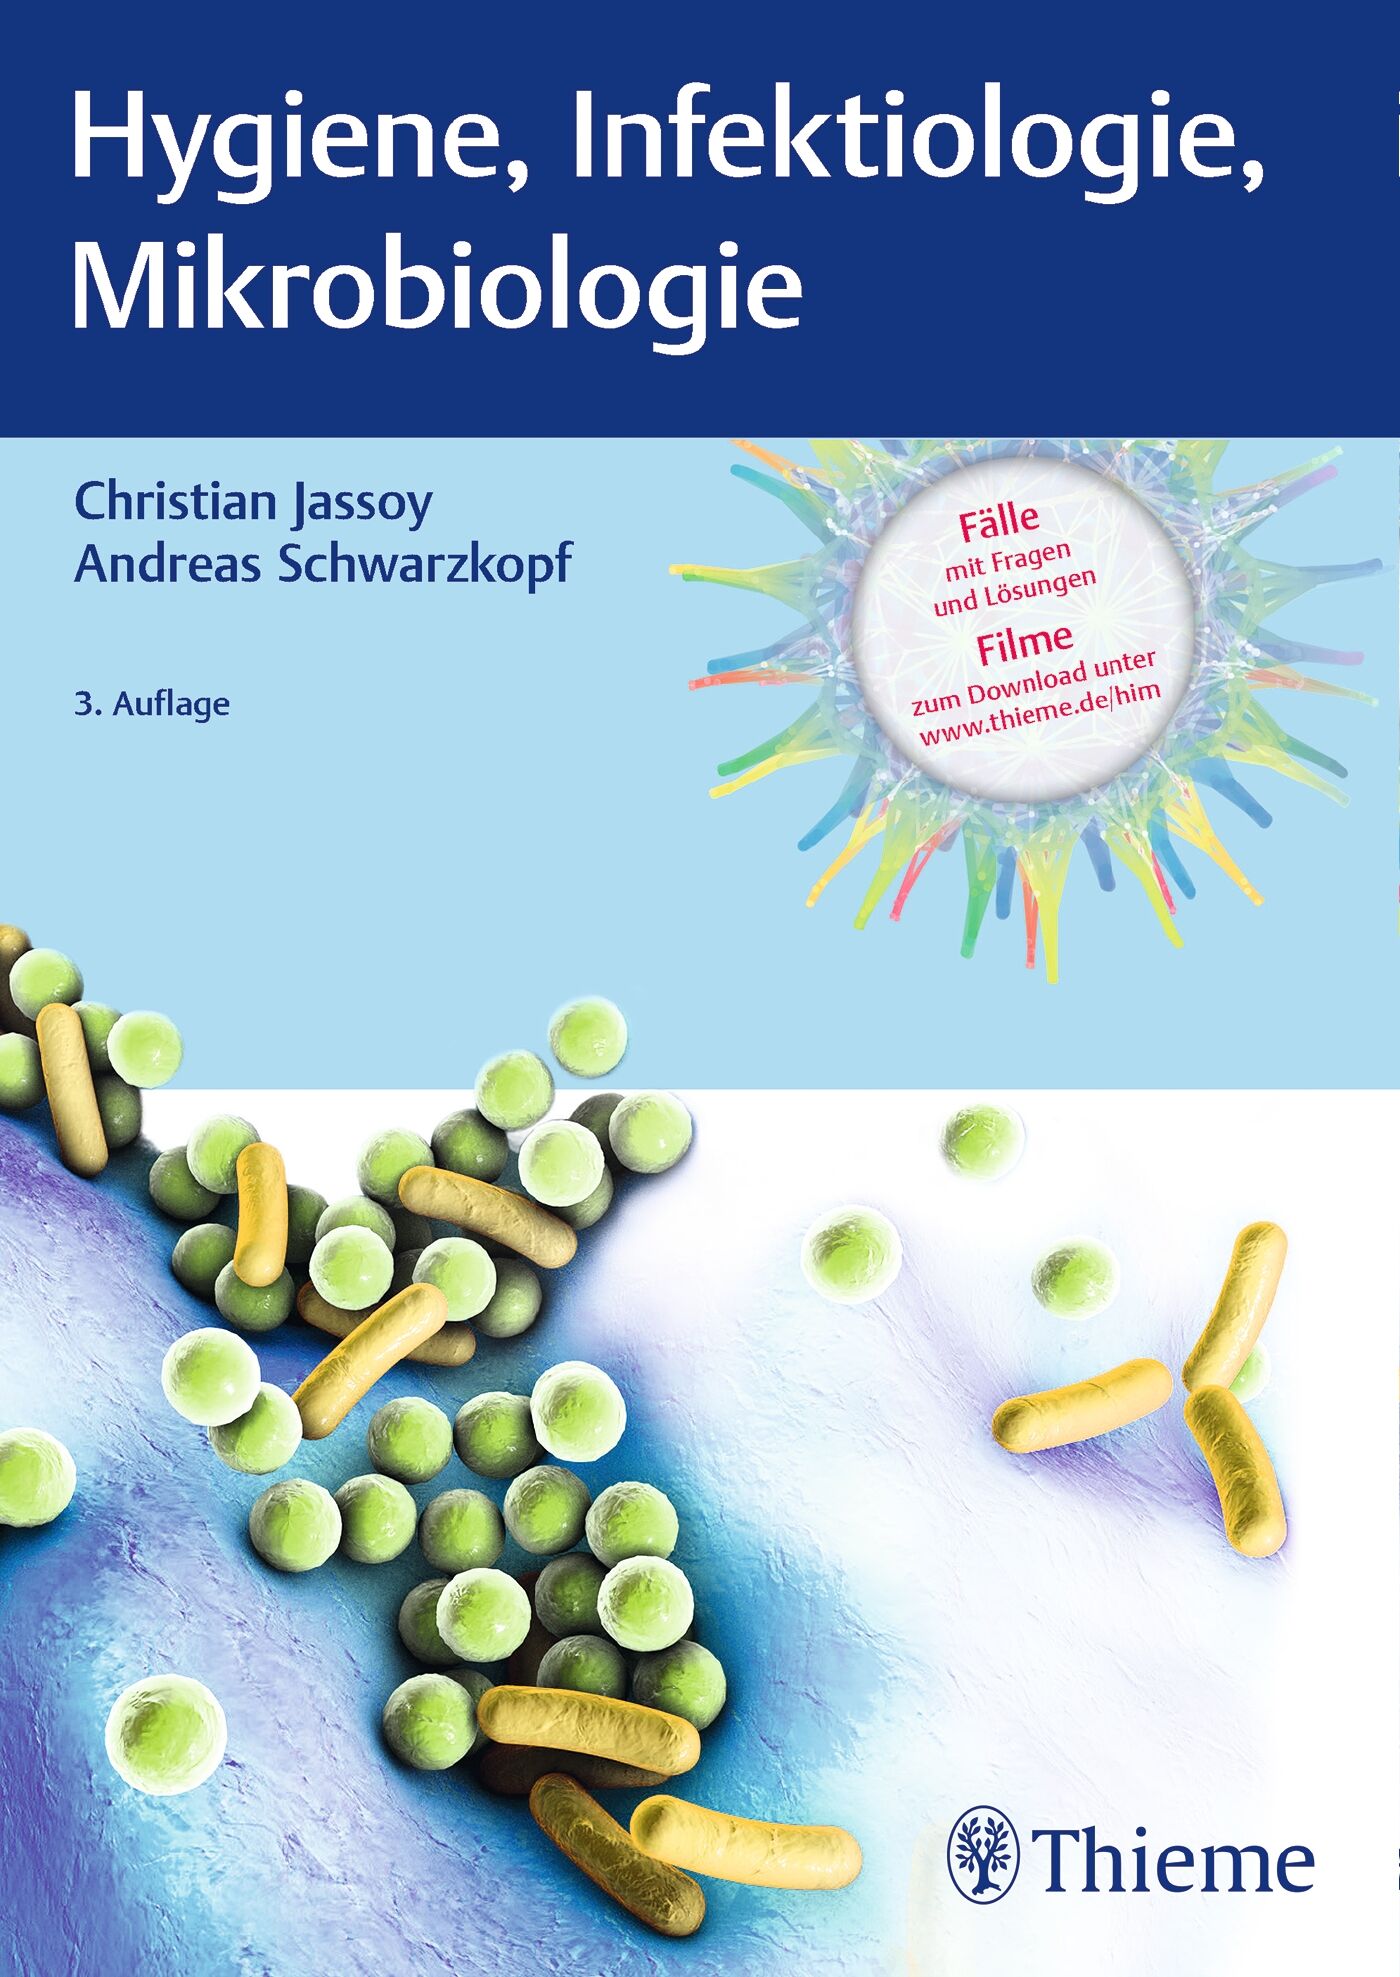 Hygiene, Infektiologie, Mikrobiologie, 9783132413696